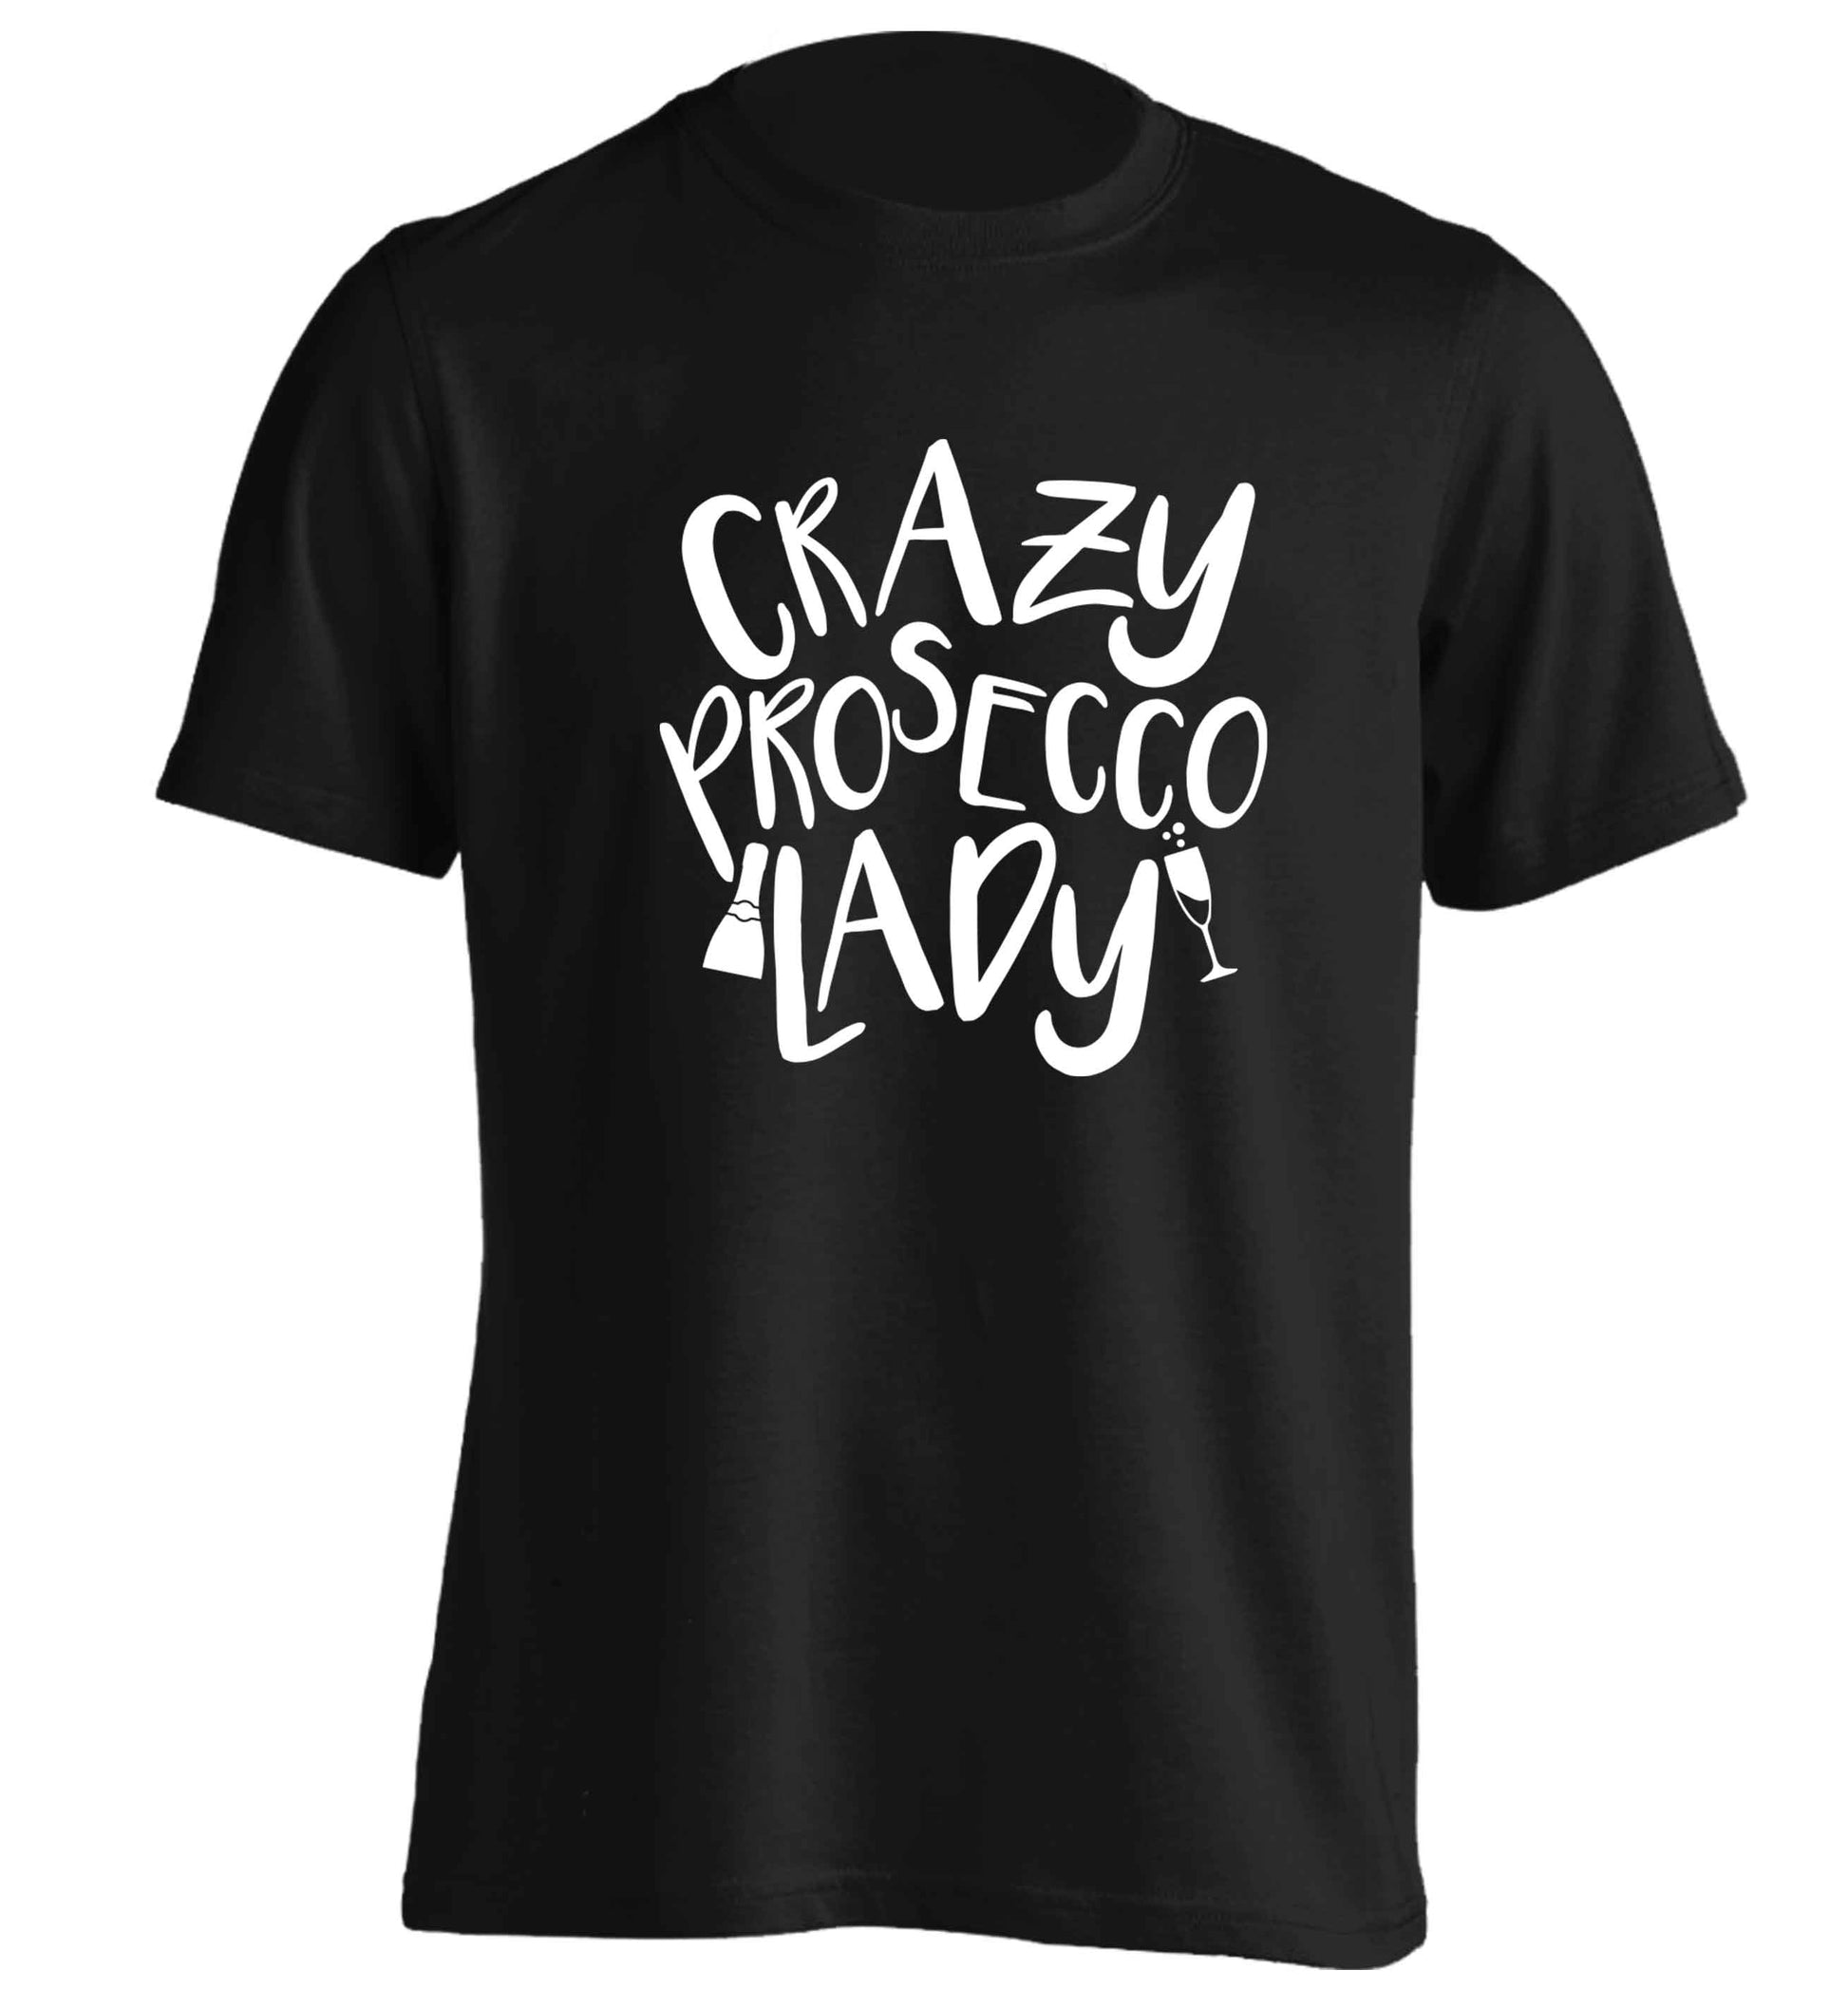 Crazy prosecco lady adults unisex black Tshirt 2XL